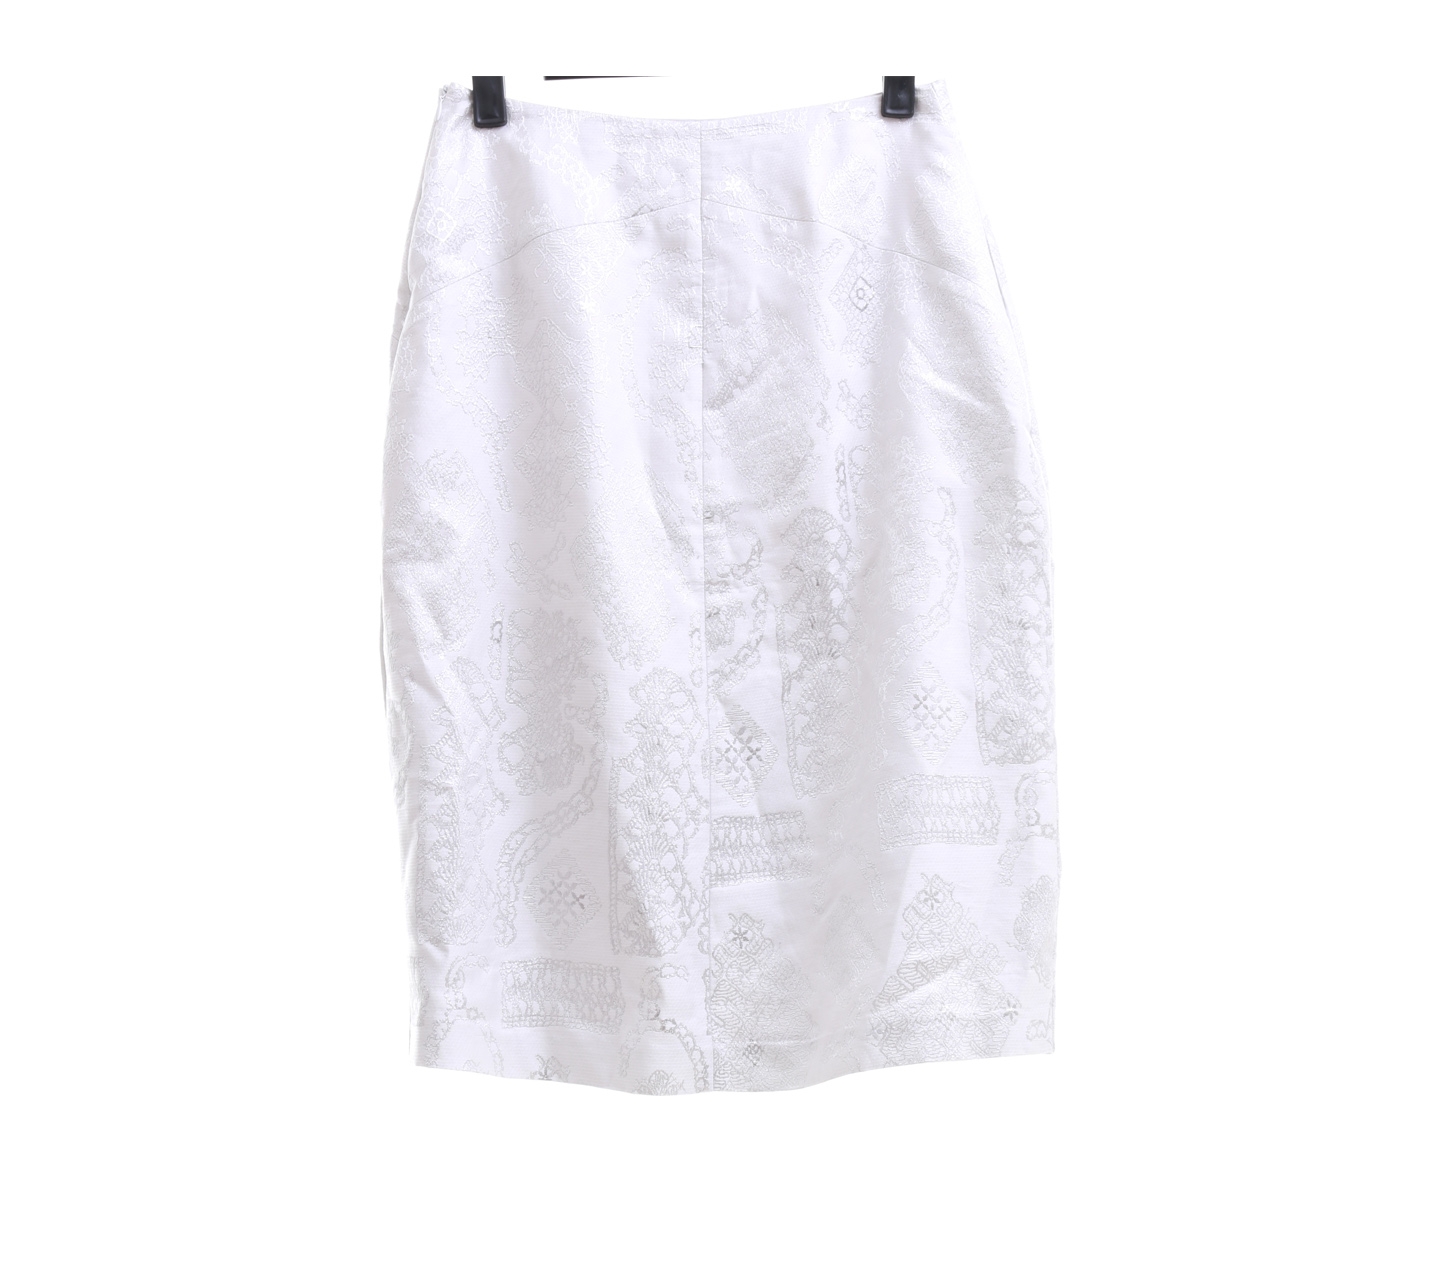 Bazar by Chirtian Locroix Silver Slit Mini Skirt